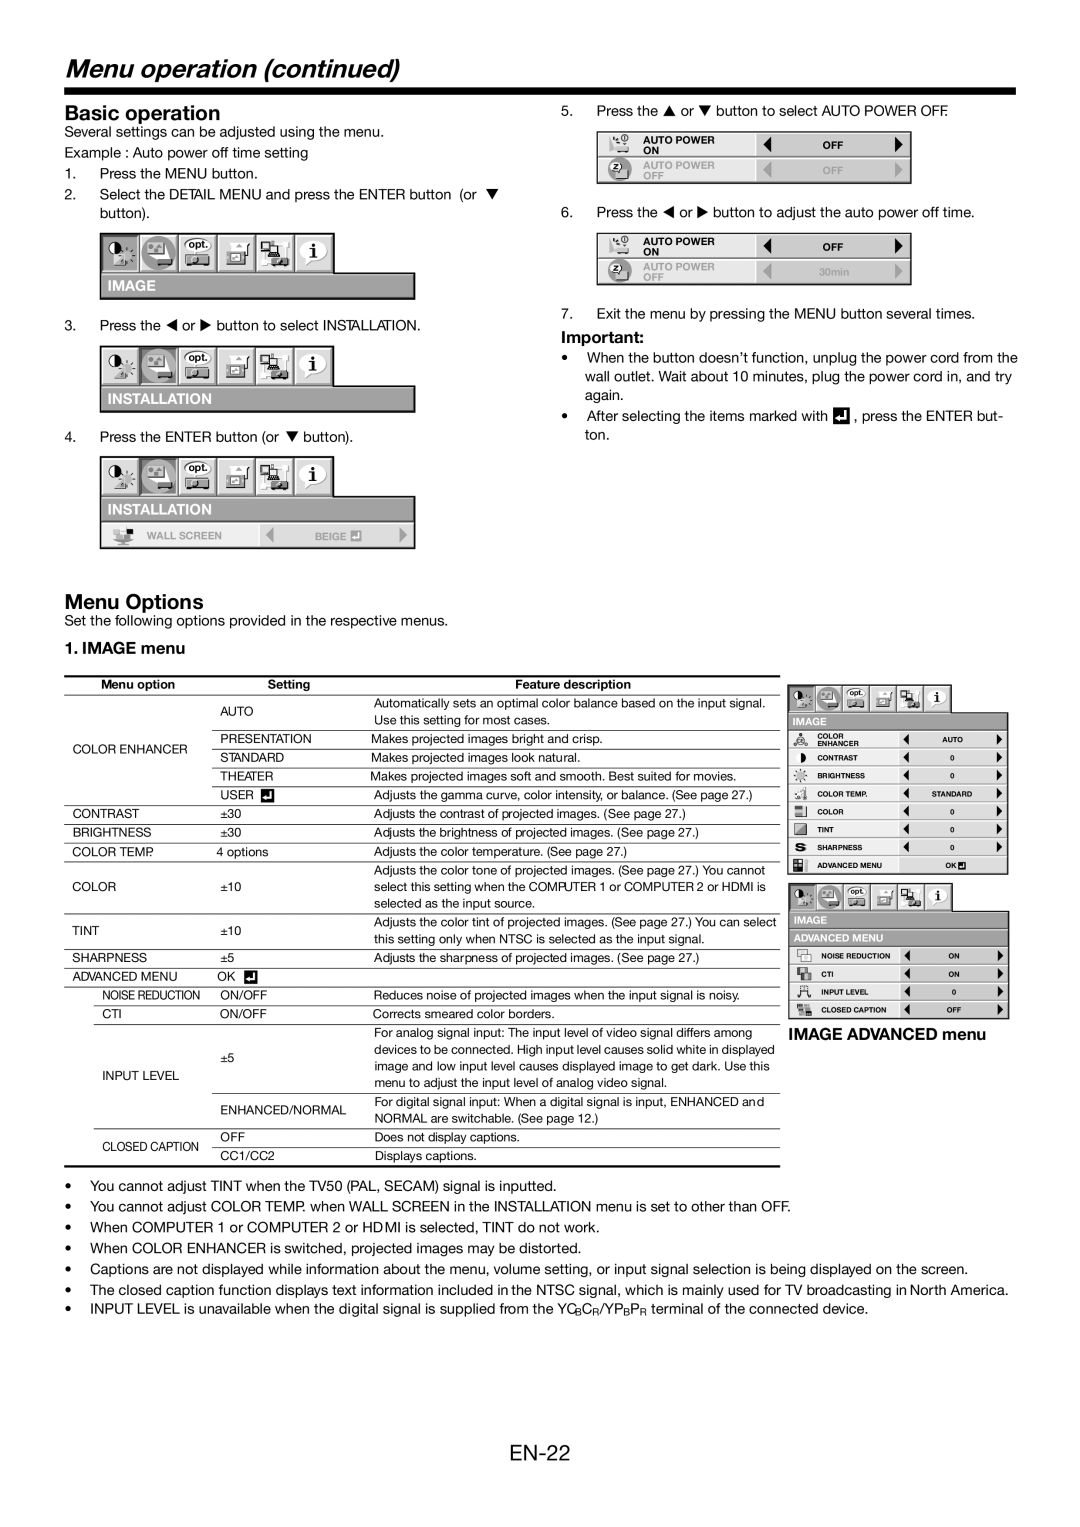 Mitsubishi Electronics FD730U-G user manual EN-22, Basic operation, Menu operation continued, Menu Options, Image, button 